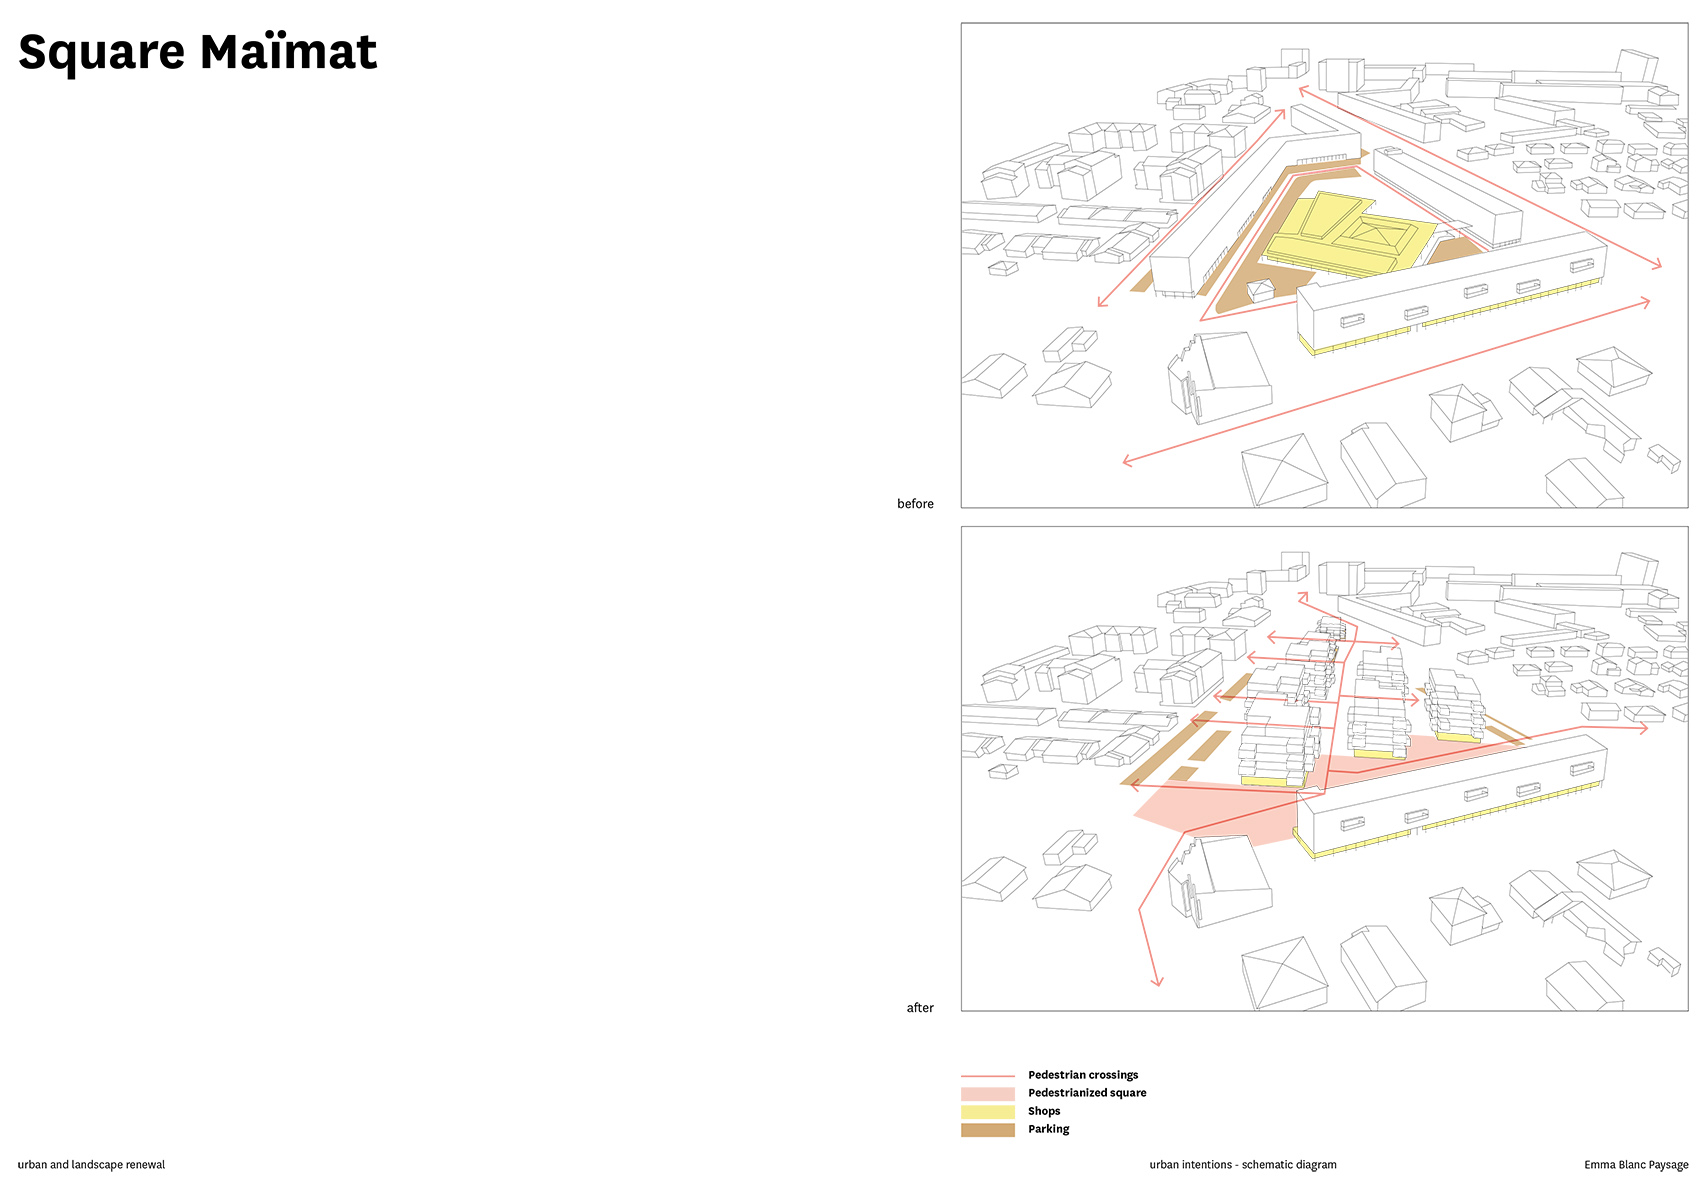 Square Maïmat住宅区更新，法国/释放公共空间，连接社区居民-101